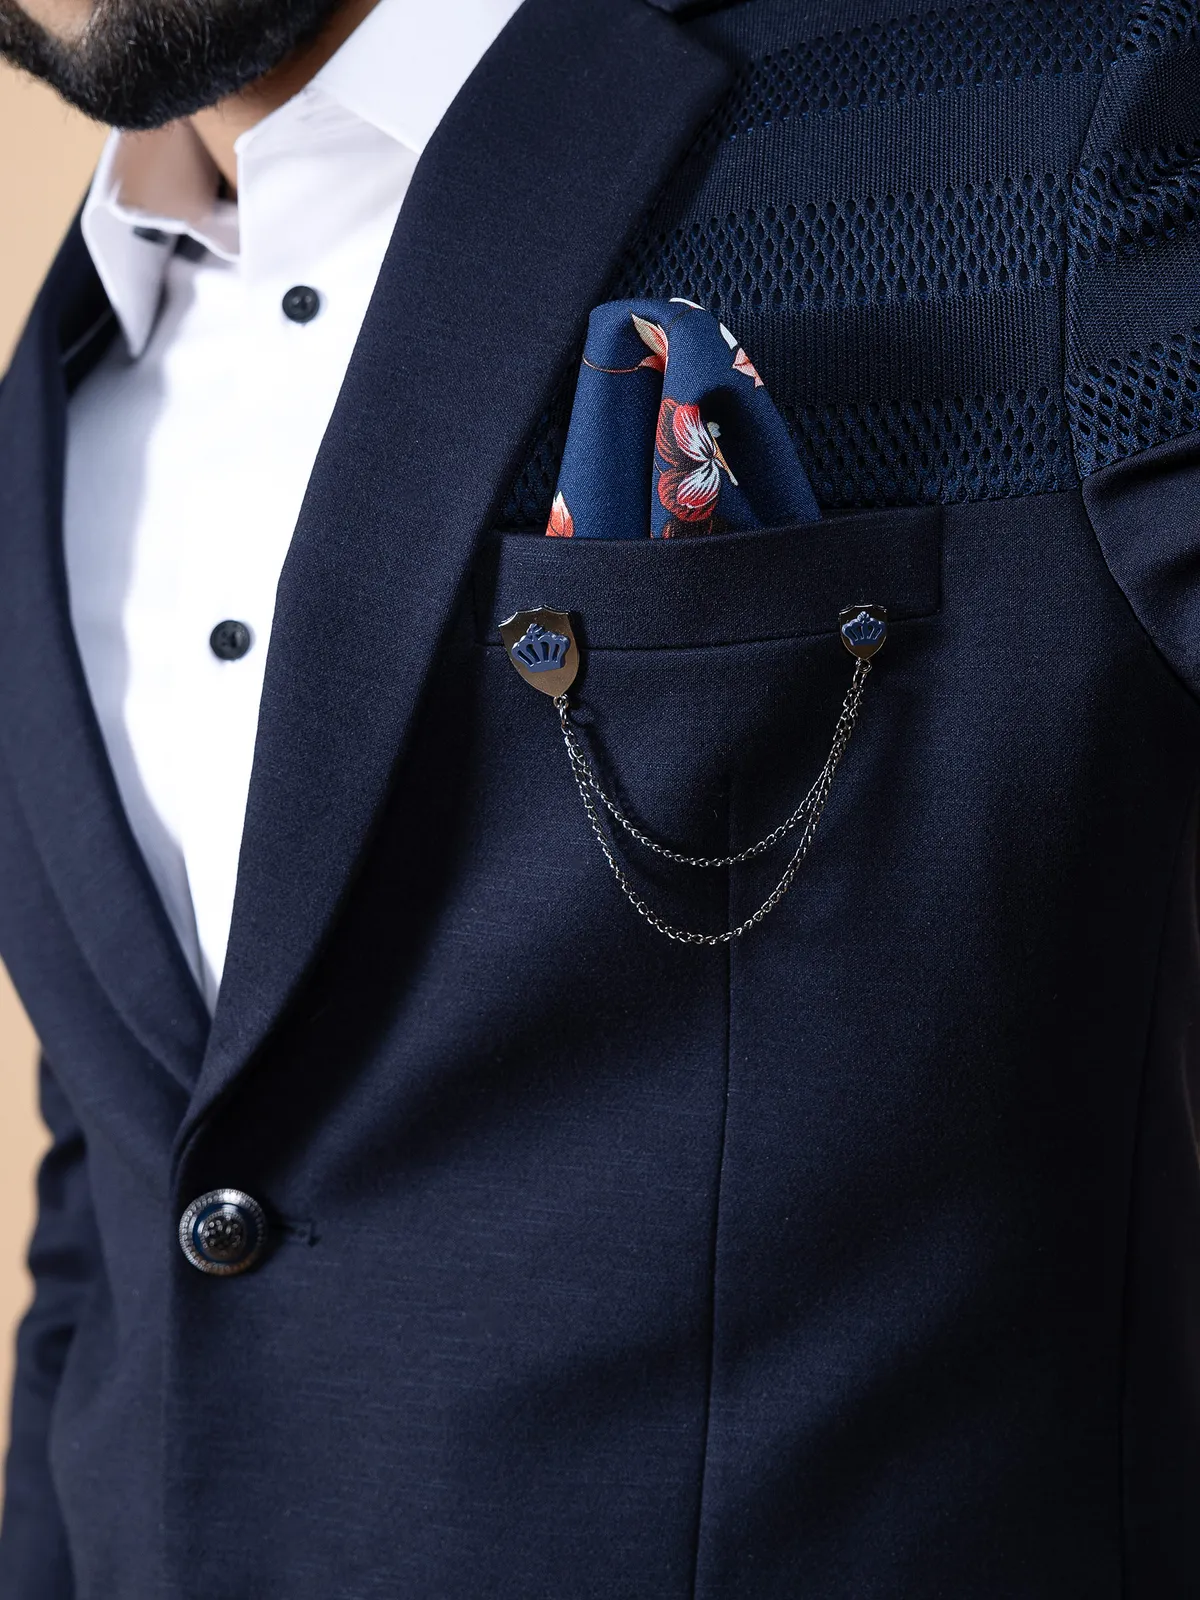 Stylish terry rayon navy blazer